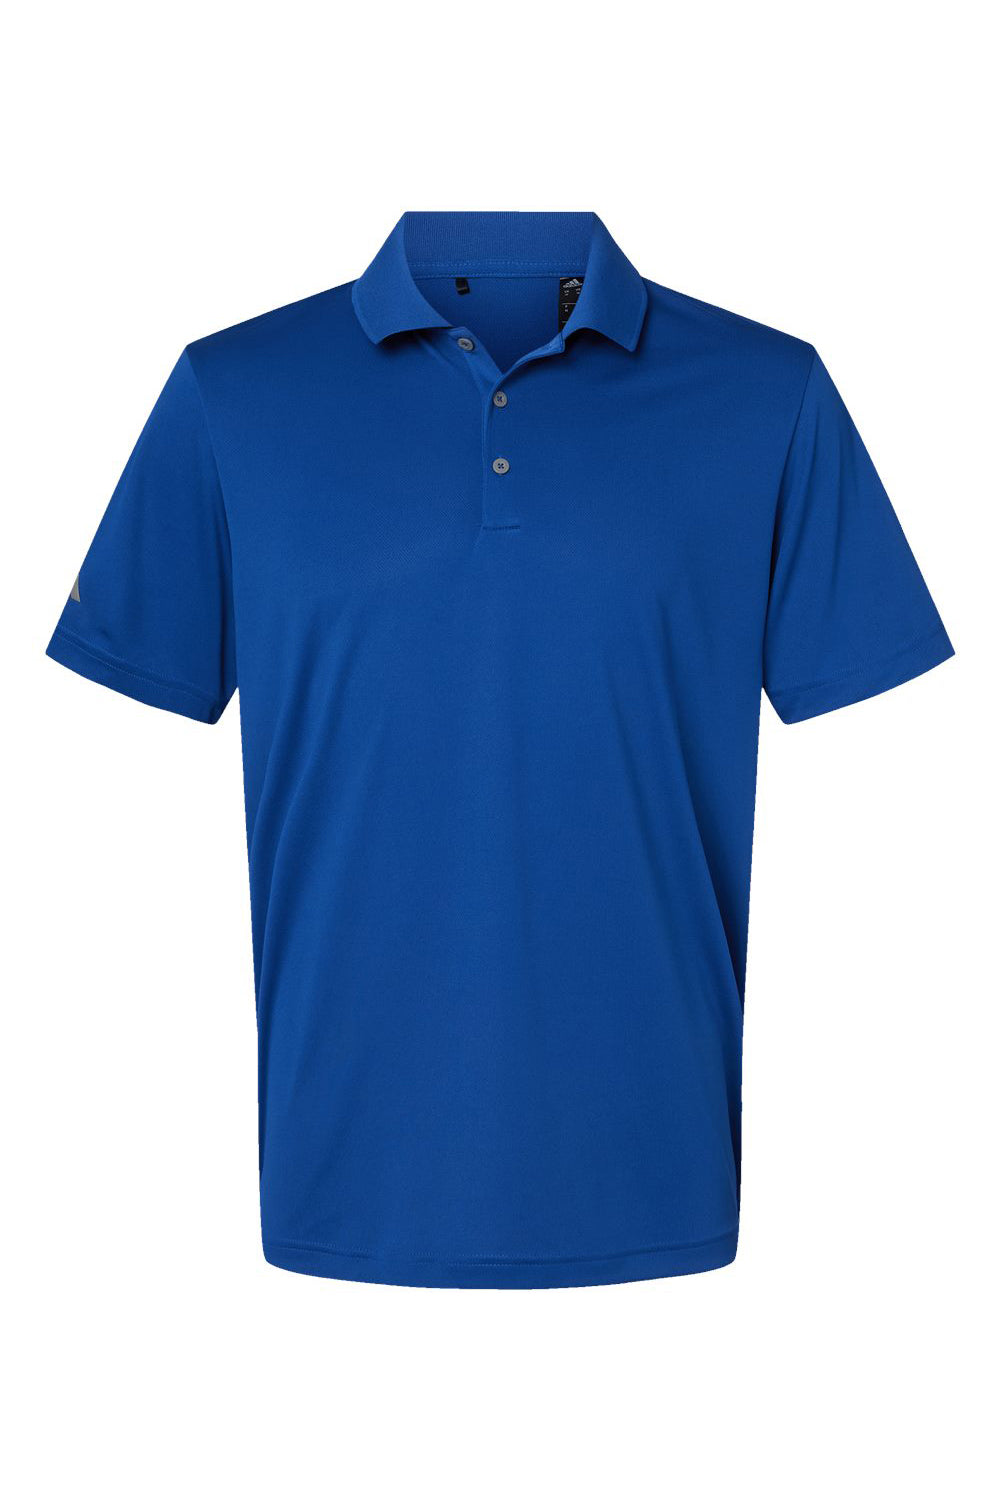 Adidas A230 Mens Performance UPF 50+ Short Sleeve Polo Shirt Collegiate Royal Blue Flat Front